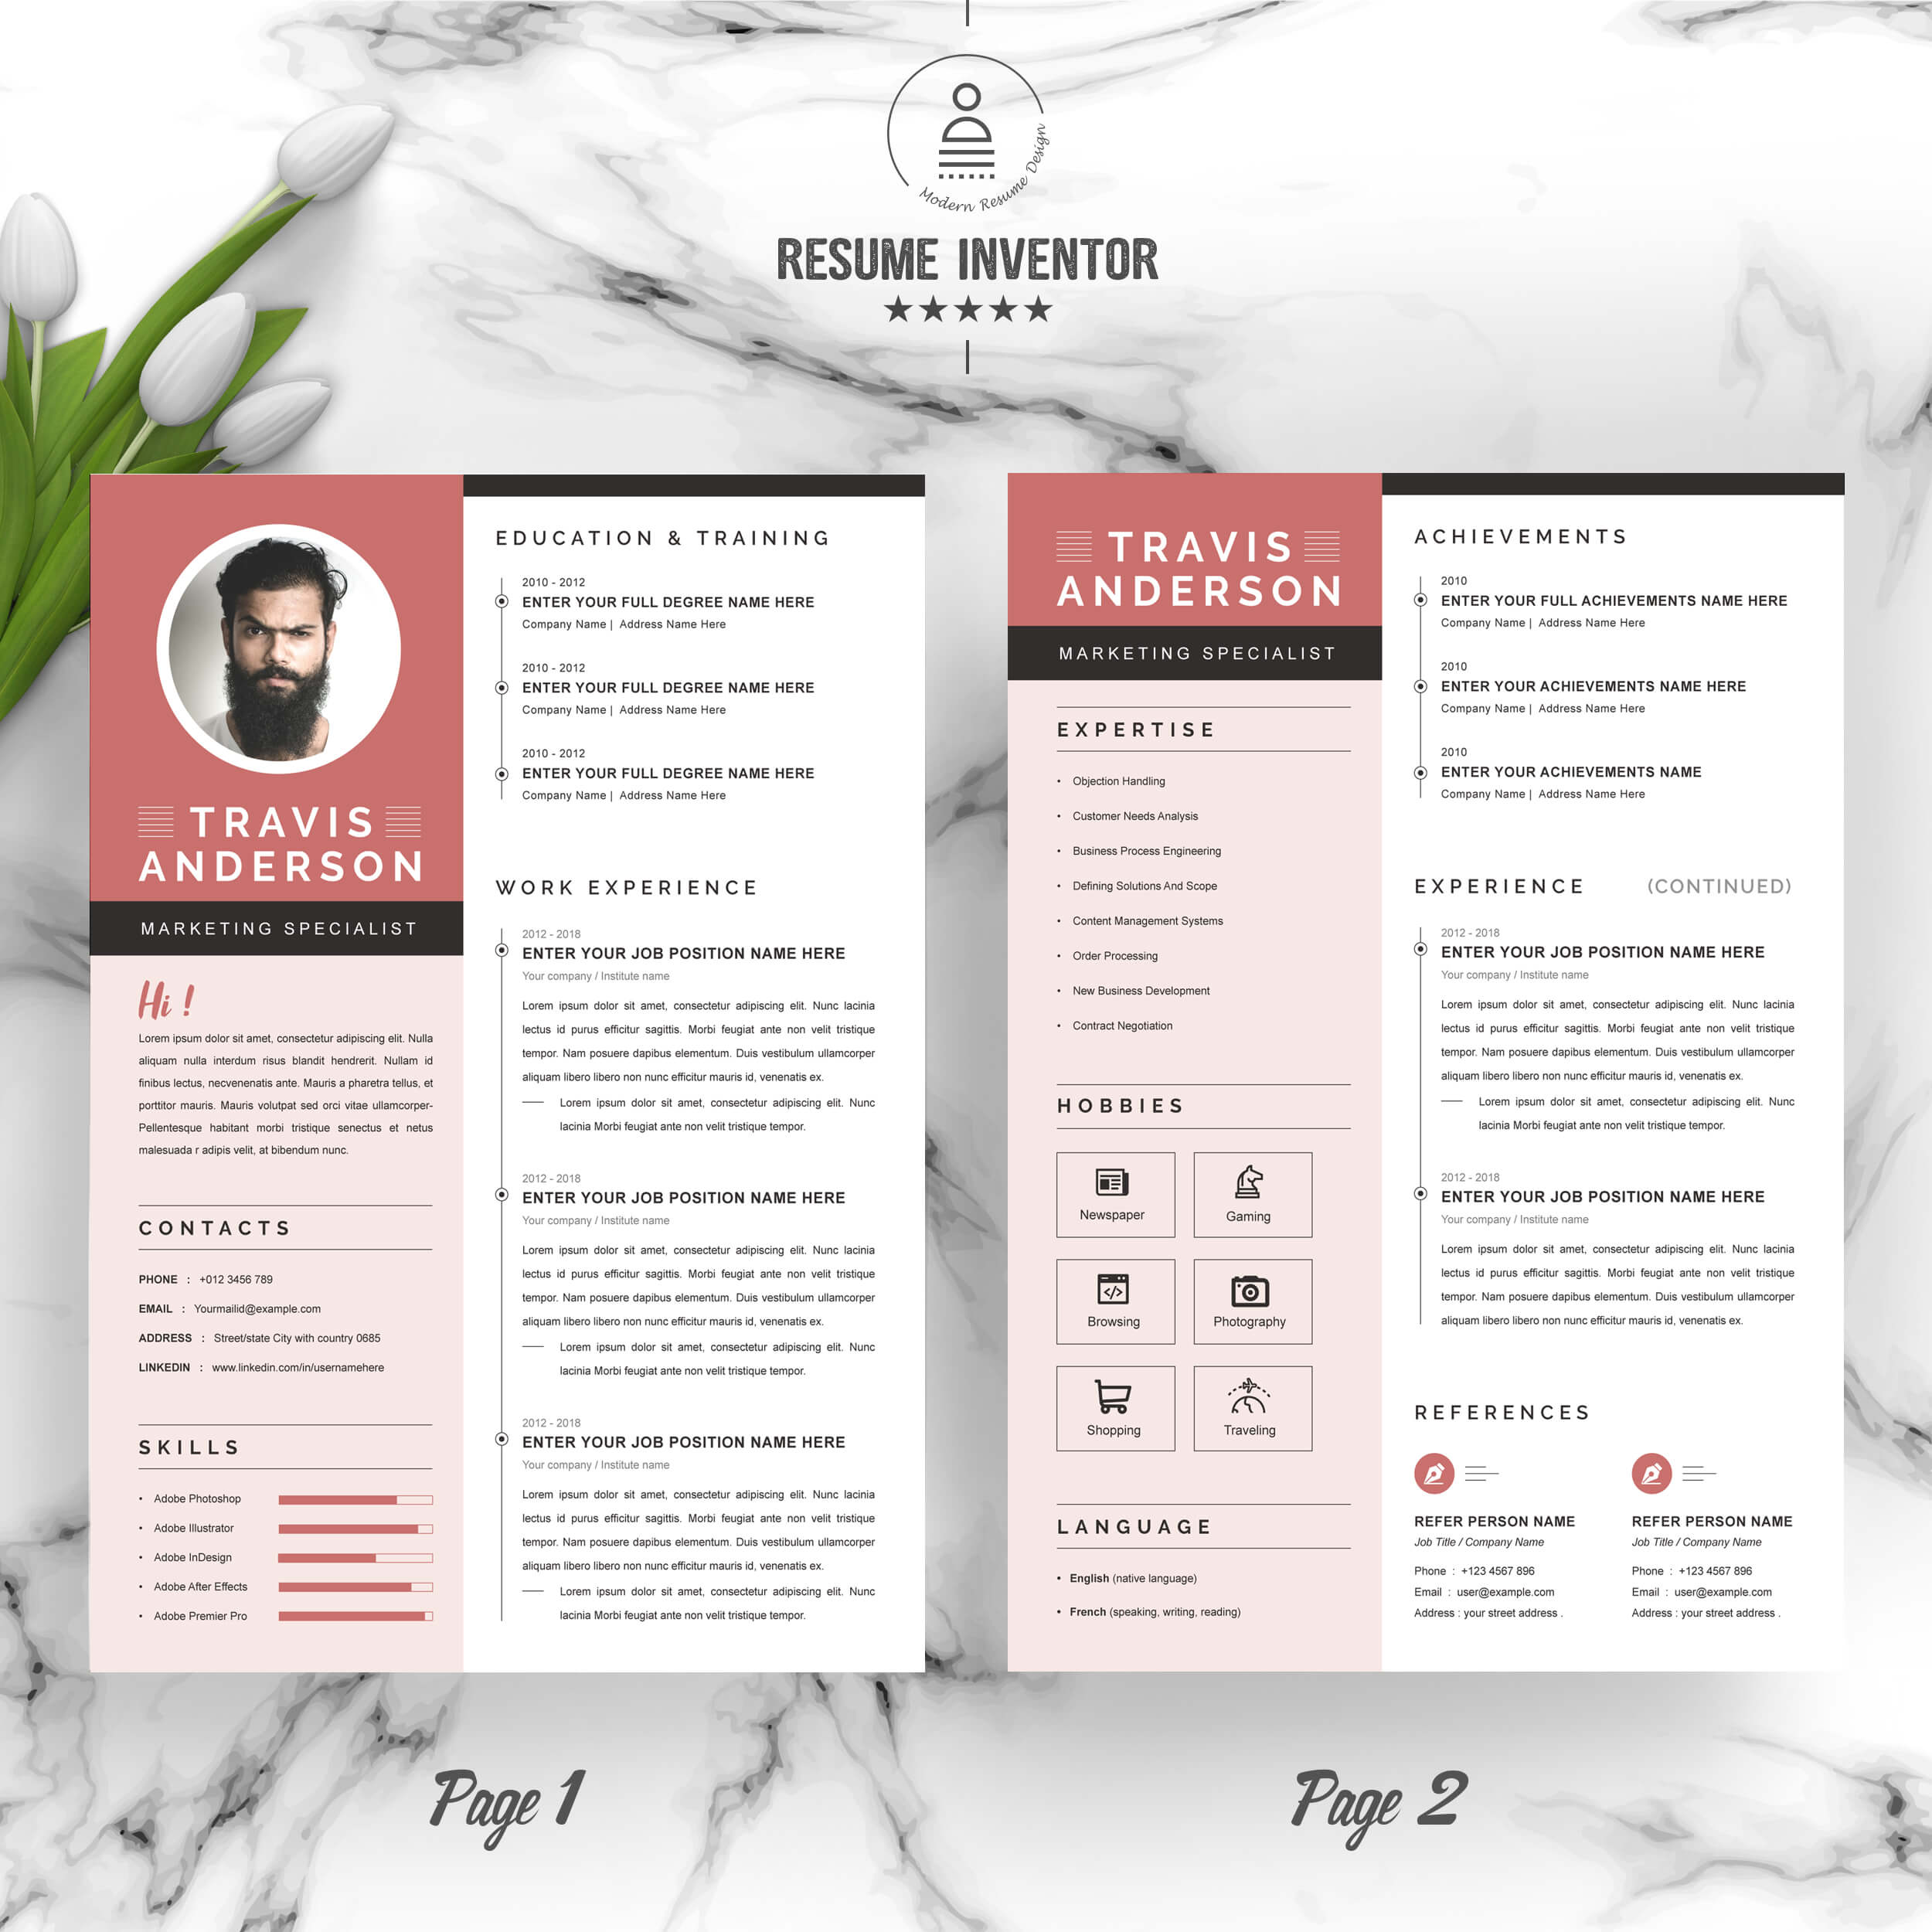 Marketing Specialist Resume & CV Designer Template | Resume Template preview image.